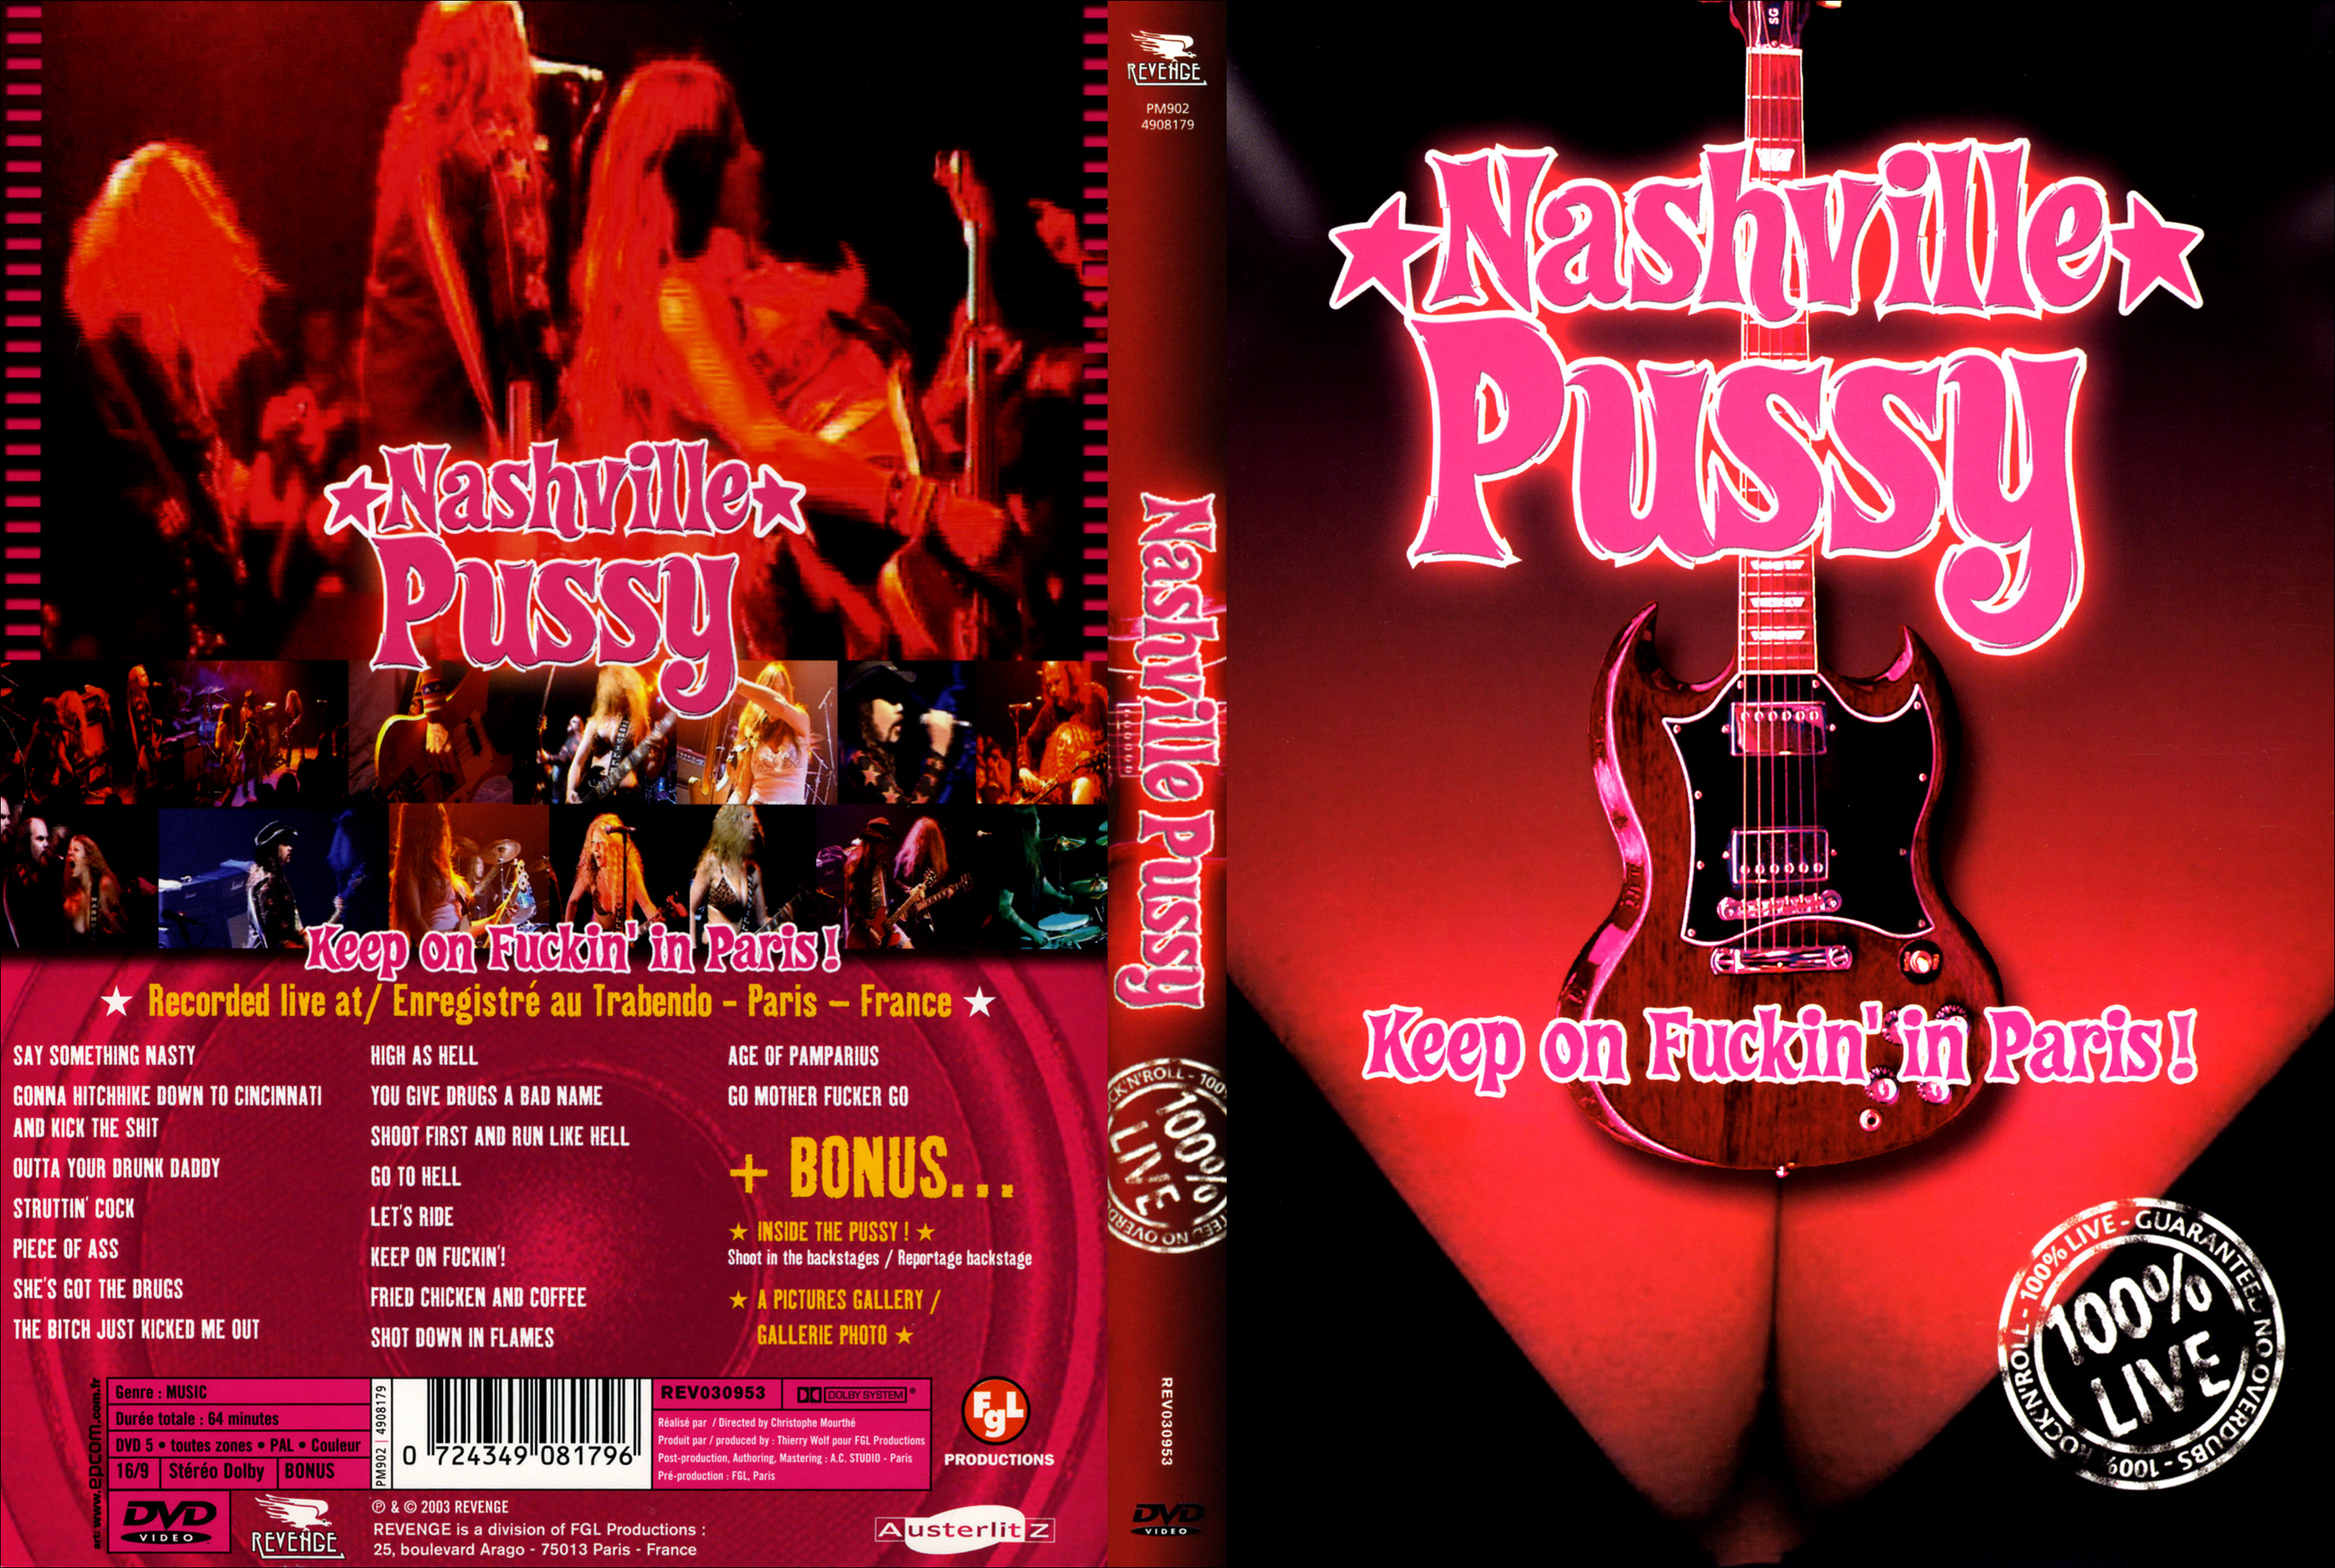 Jaquette DVD Nashville Pussy - Keep on fuckin